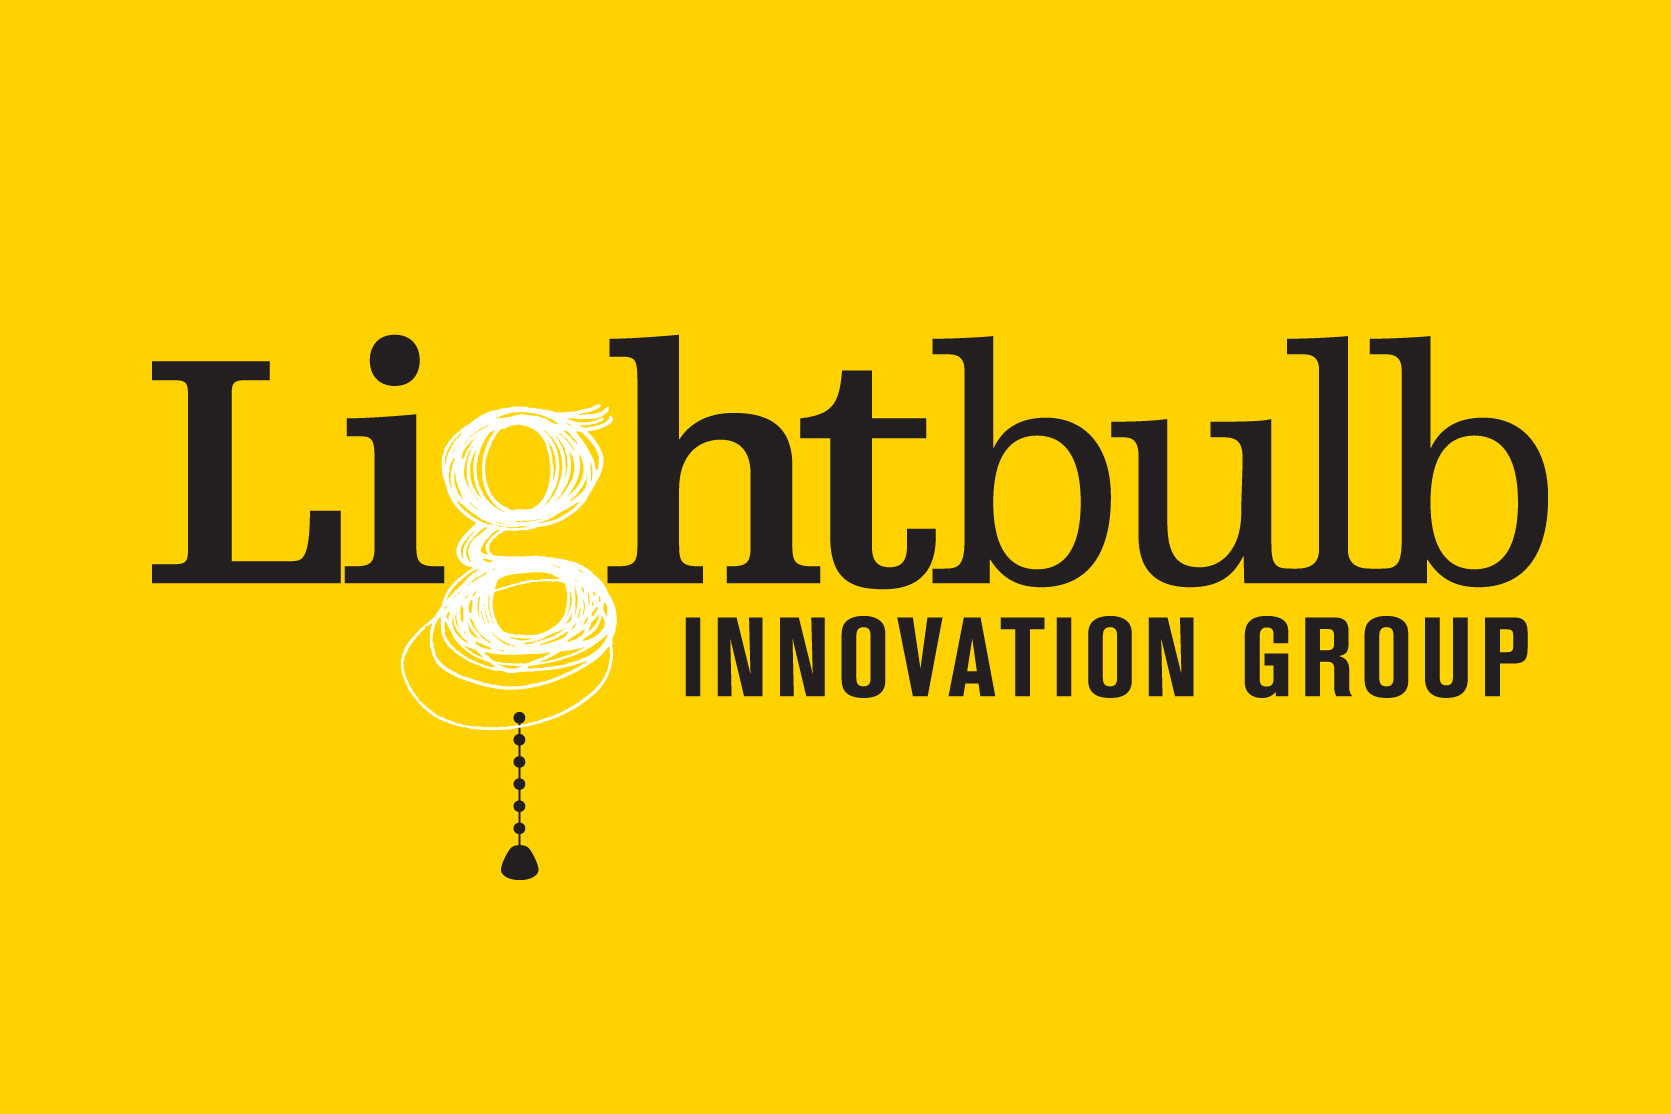 Lightbulb Innovation Group – Locomotion Creative